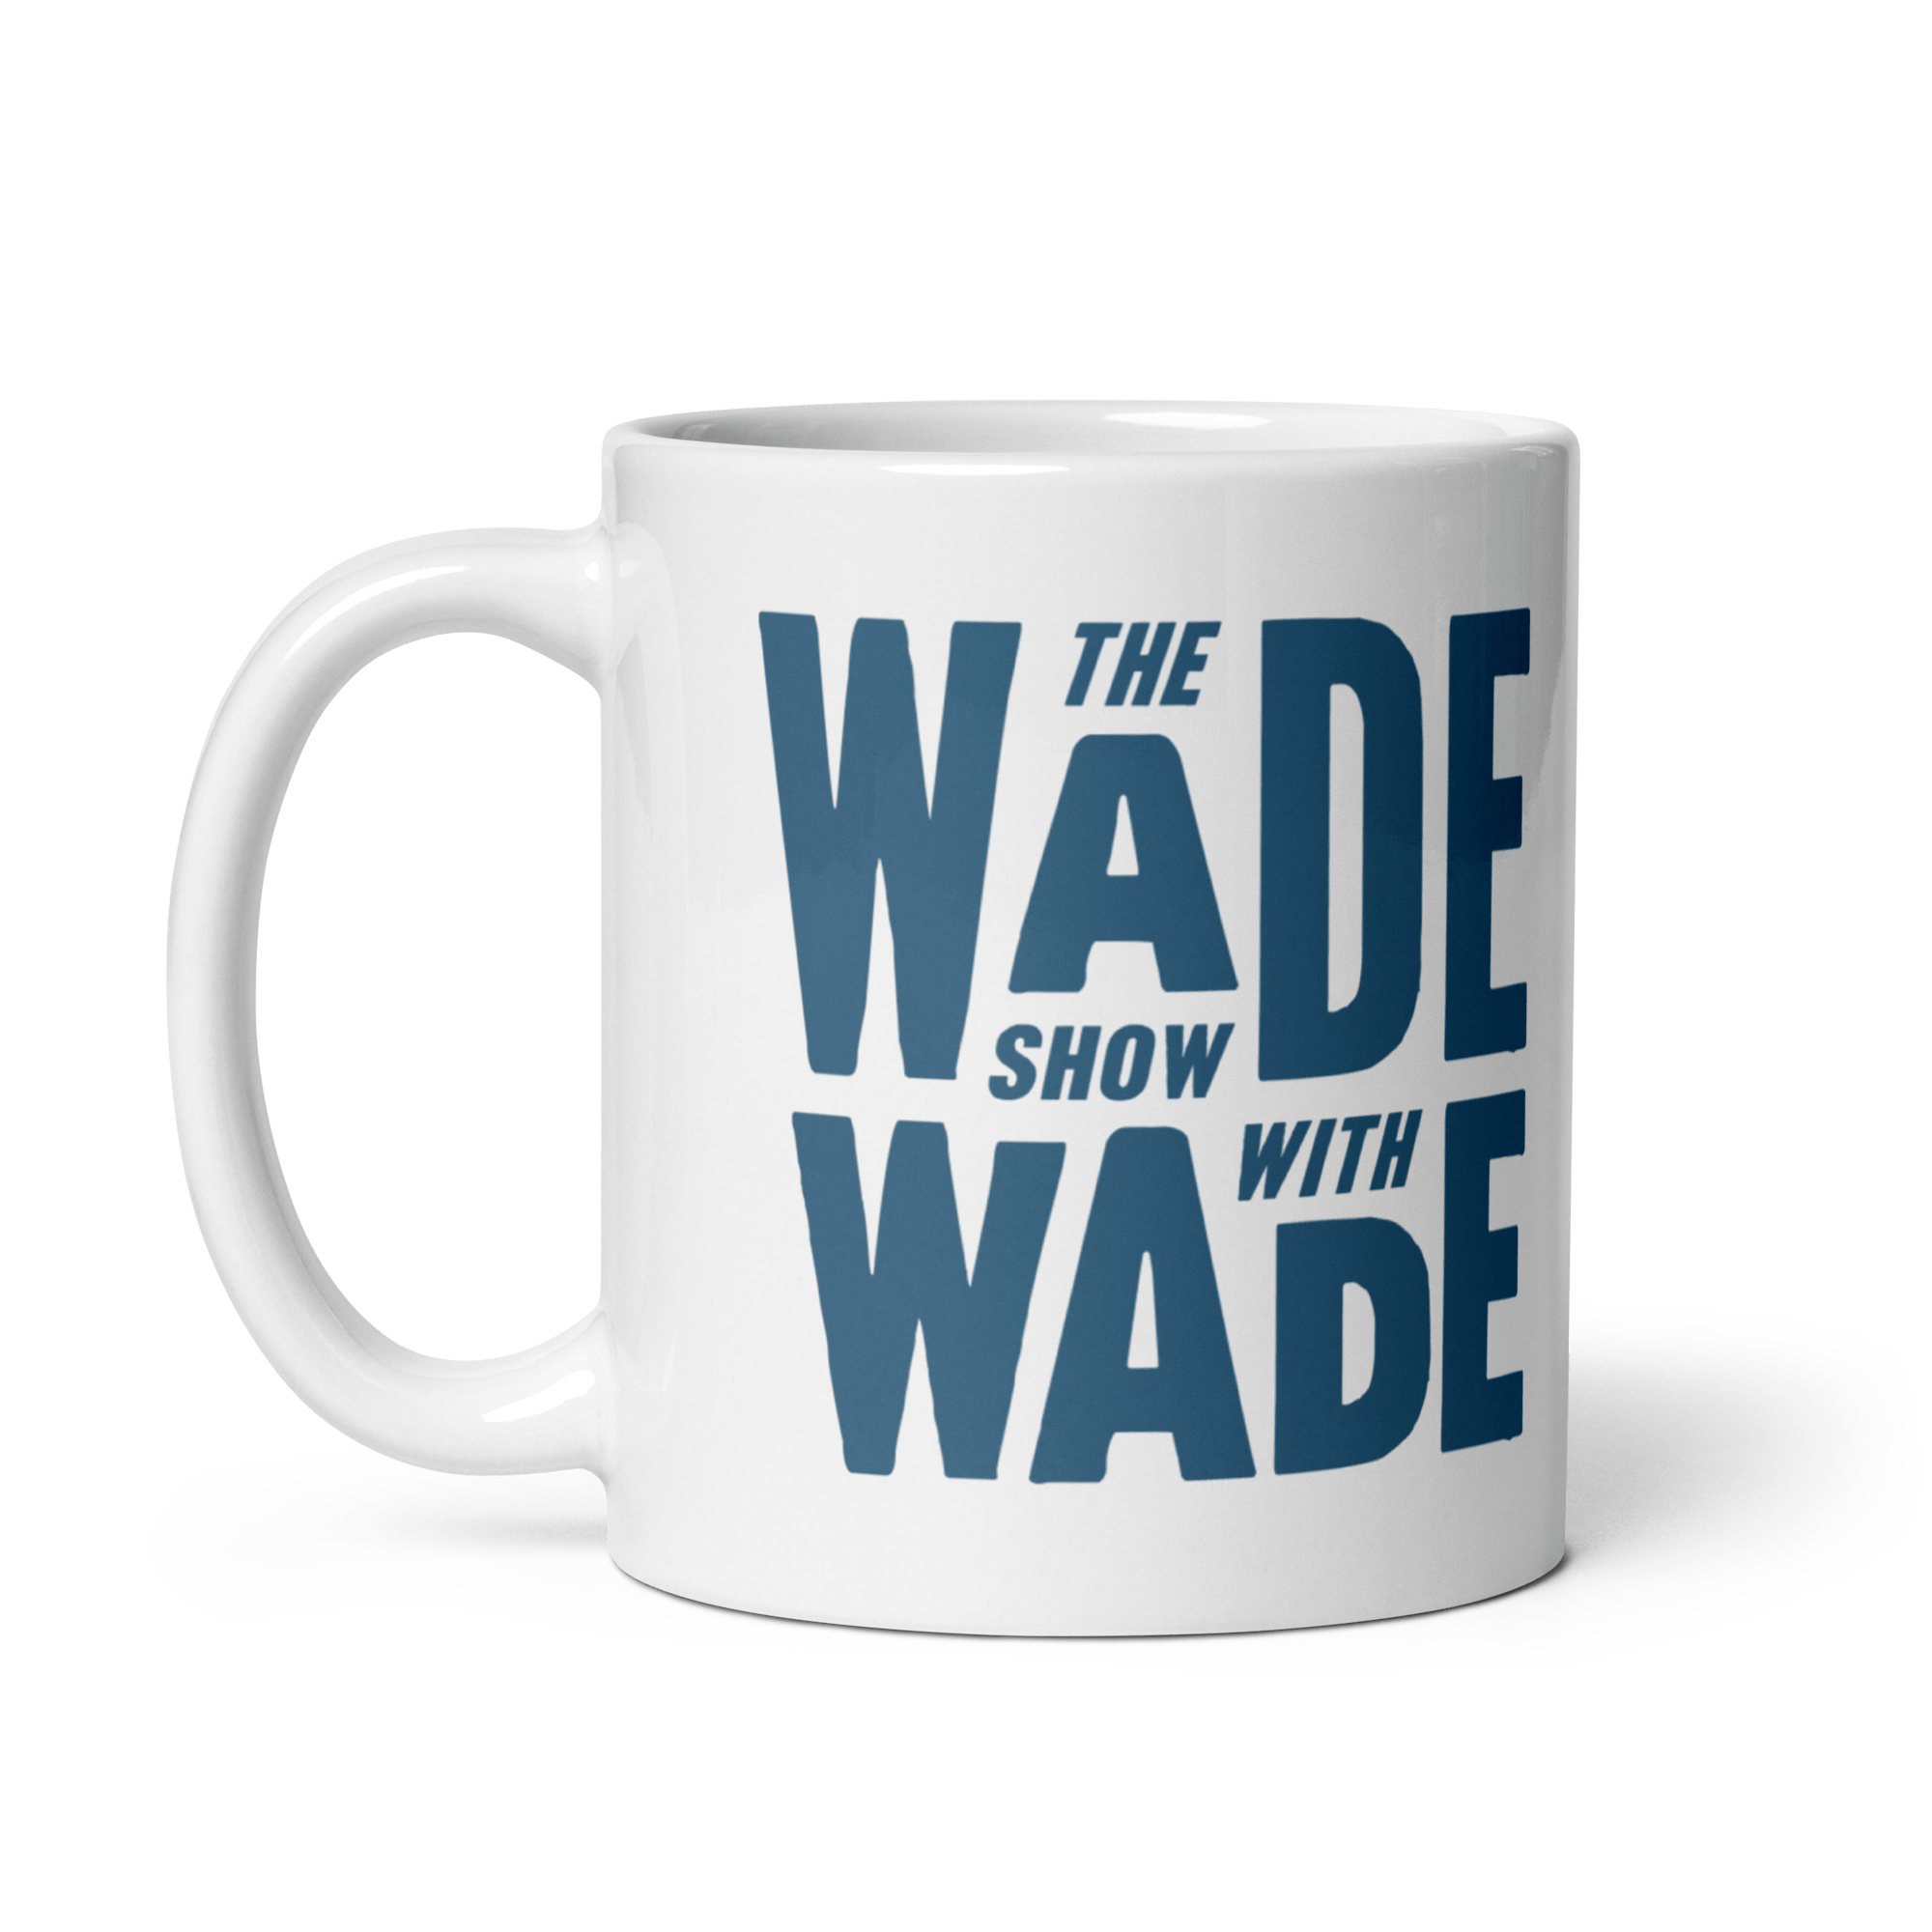 The Wade Show Mug